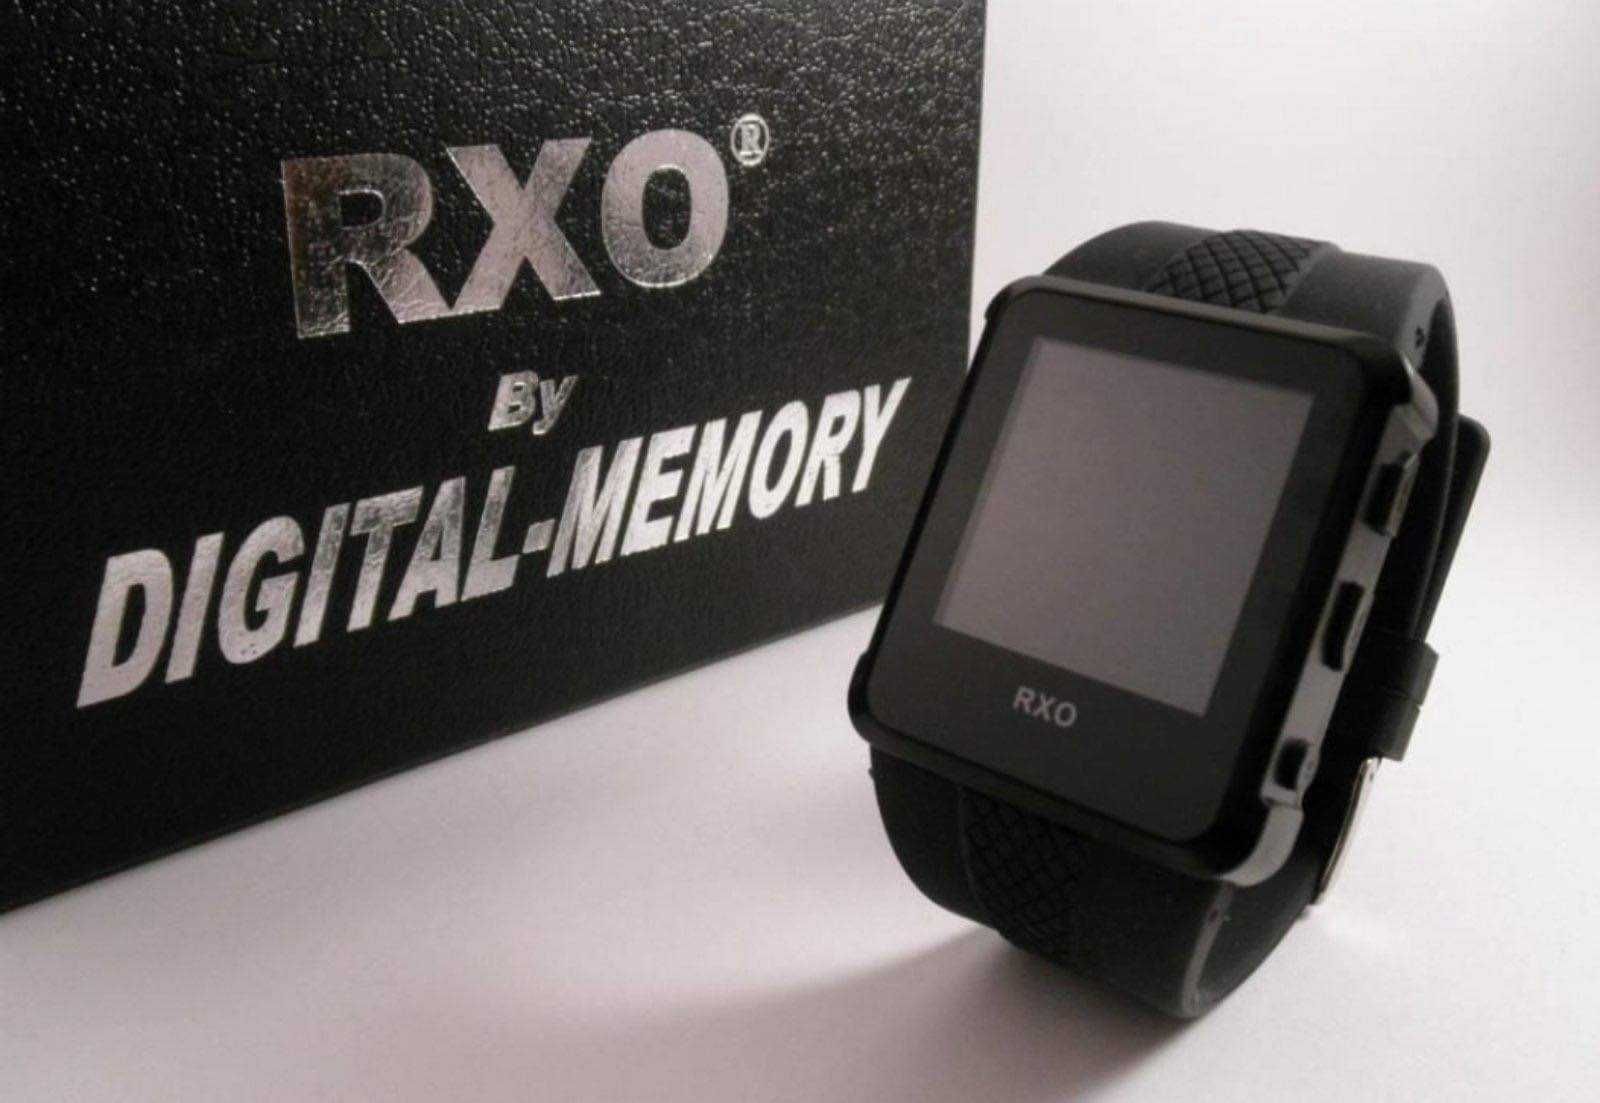 Часовник RXO Digital-memory